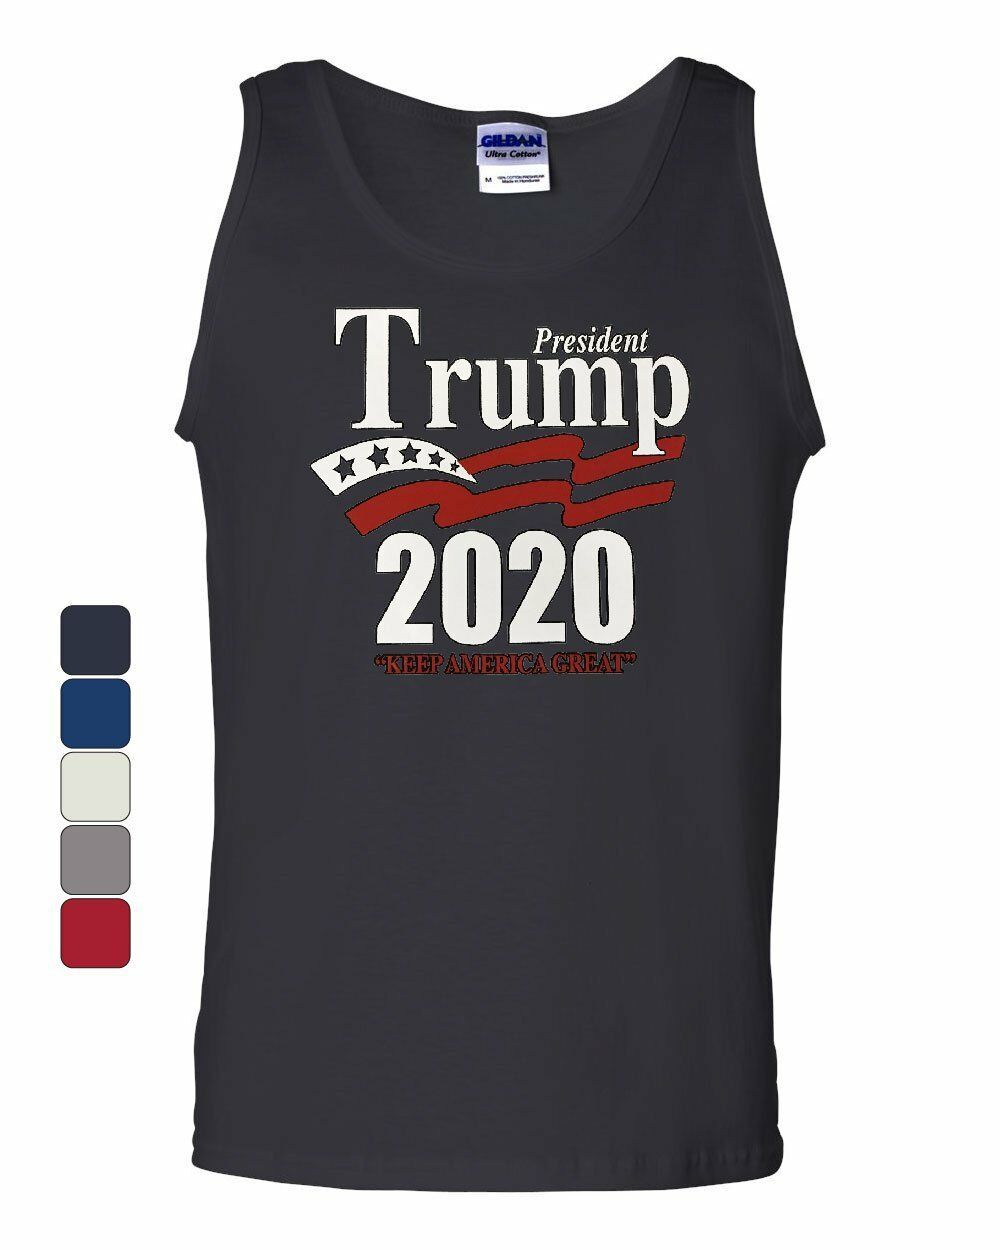 Keep America Great Tank Top President Trump 2020 MAGA Republican Sleeveless